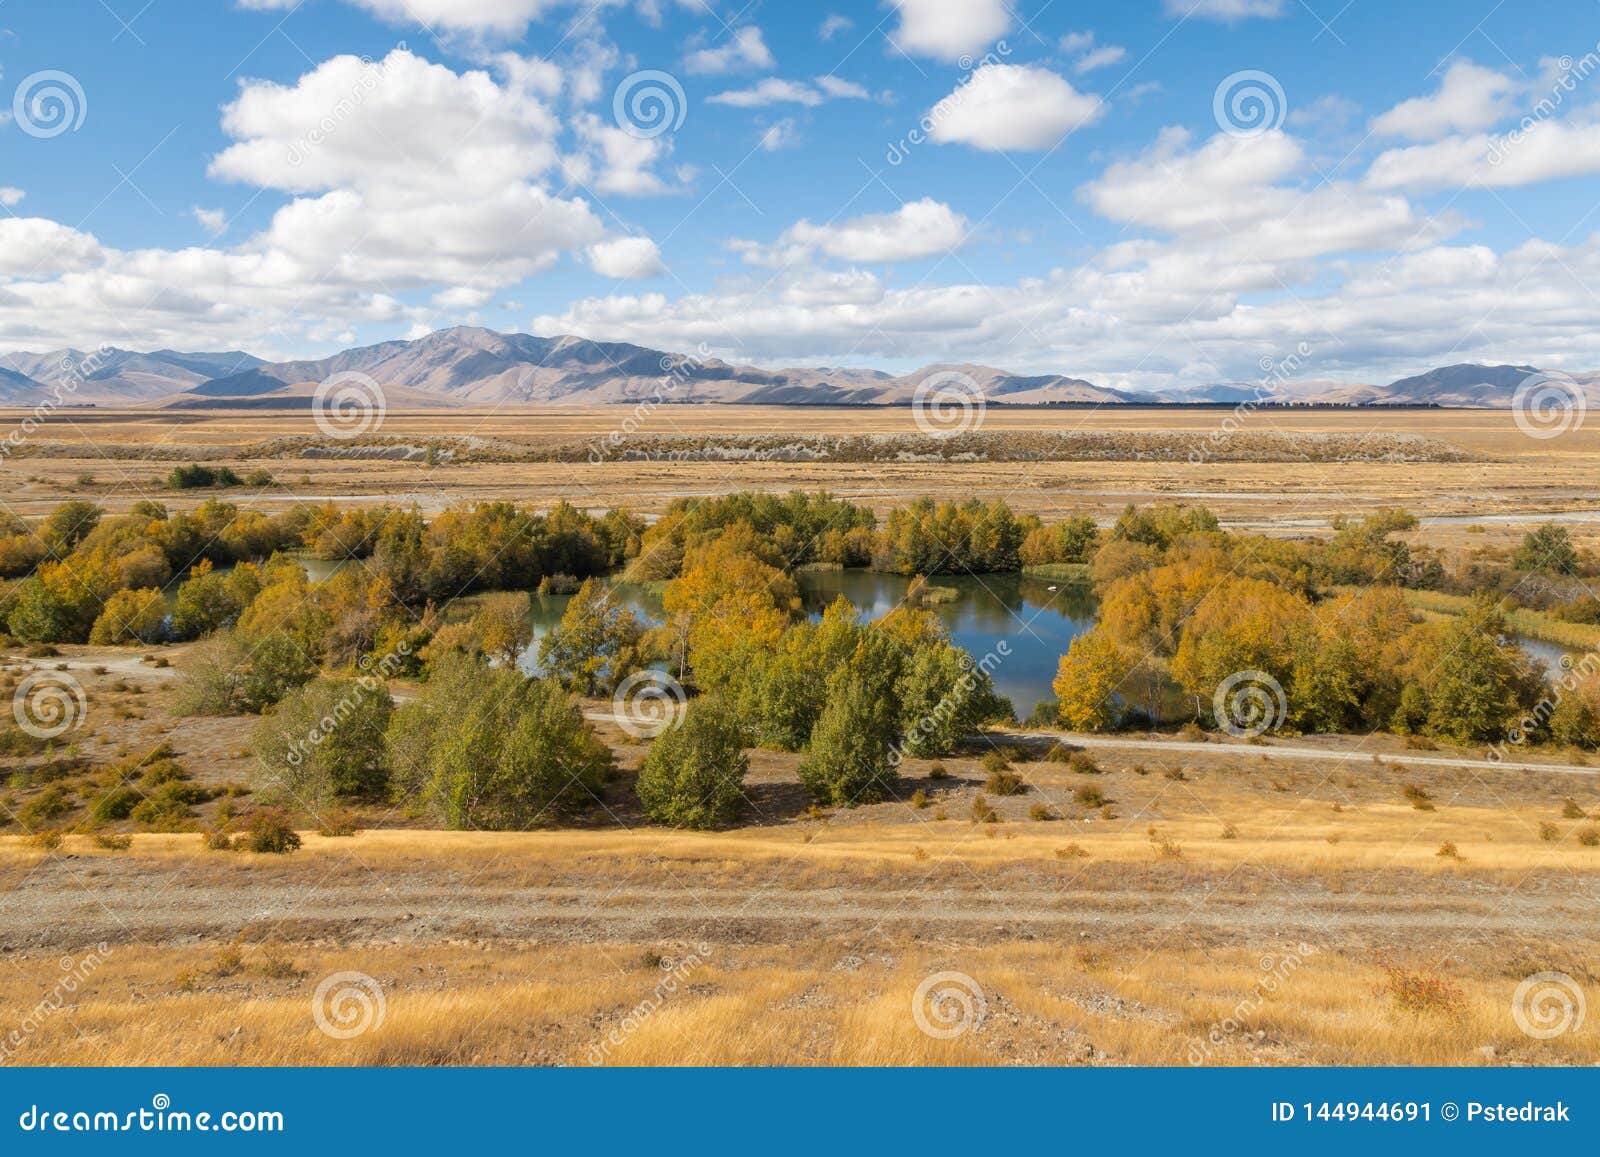 mackenzie country with tekapo river in autumn, new zealand